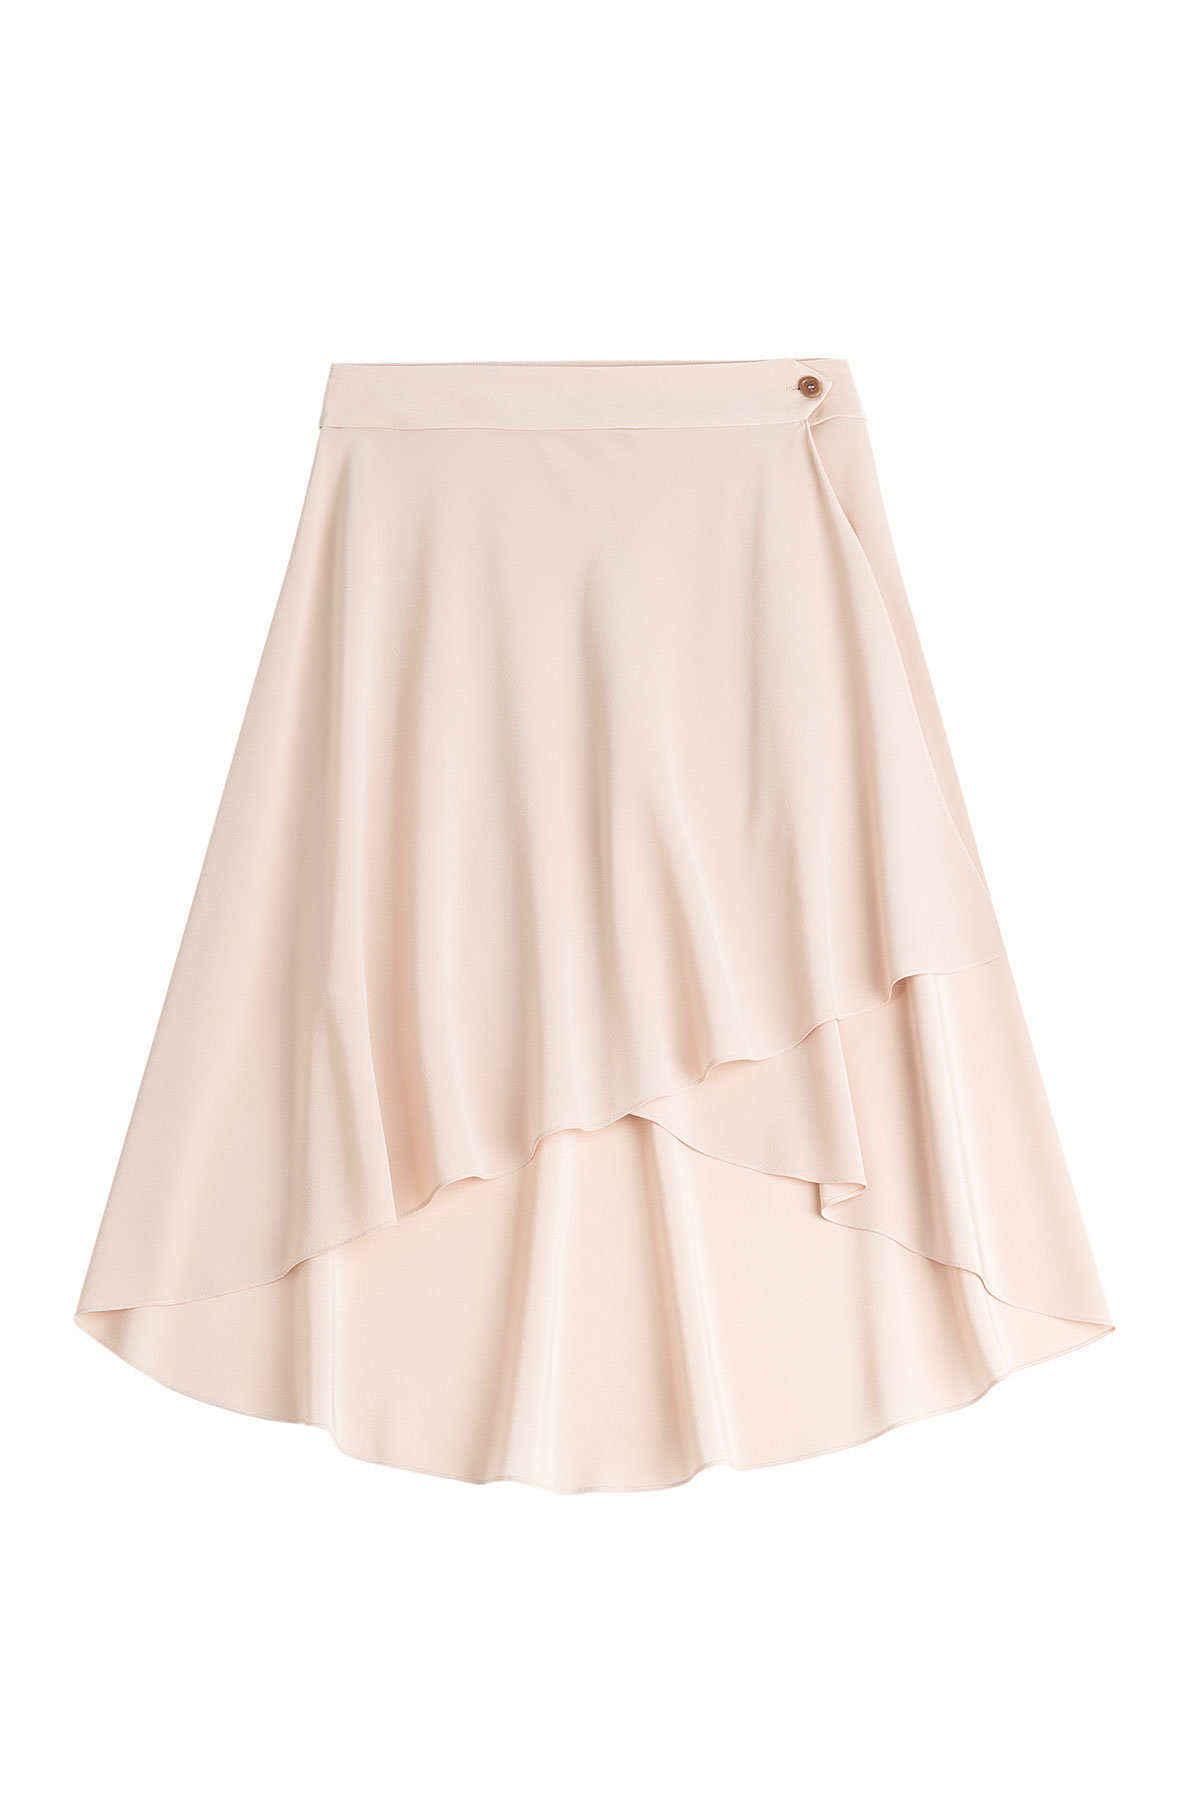 Agnona - Silk Skirt